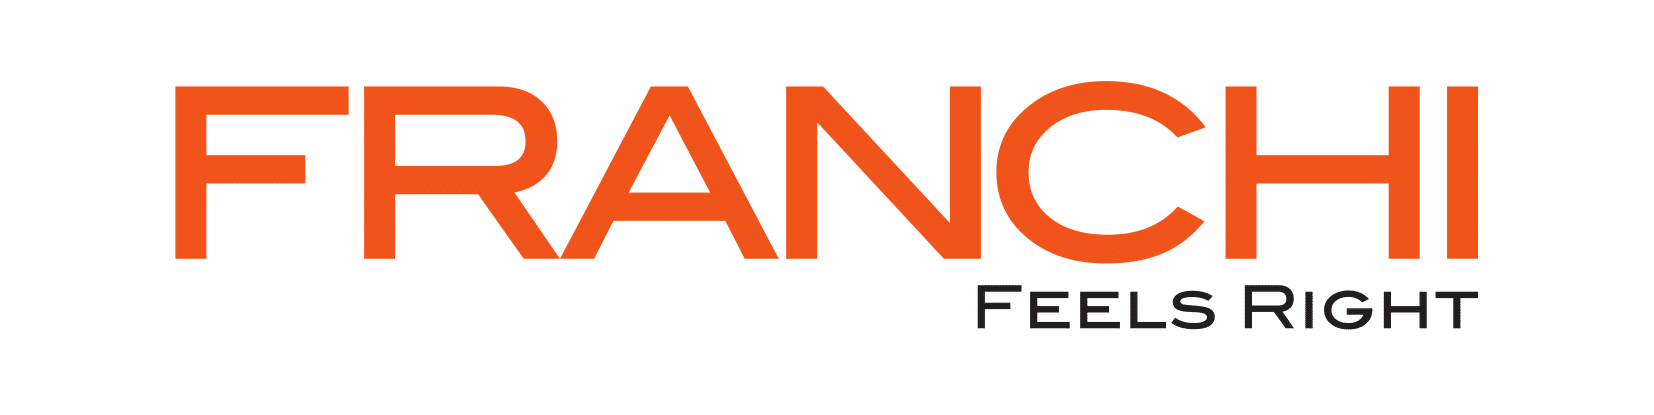 Franchi-Feels-Right-logo